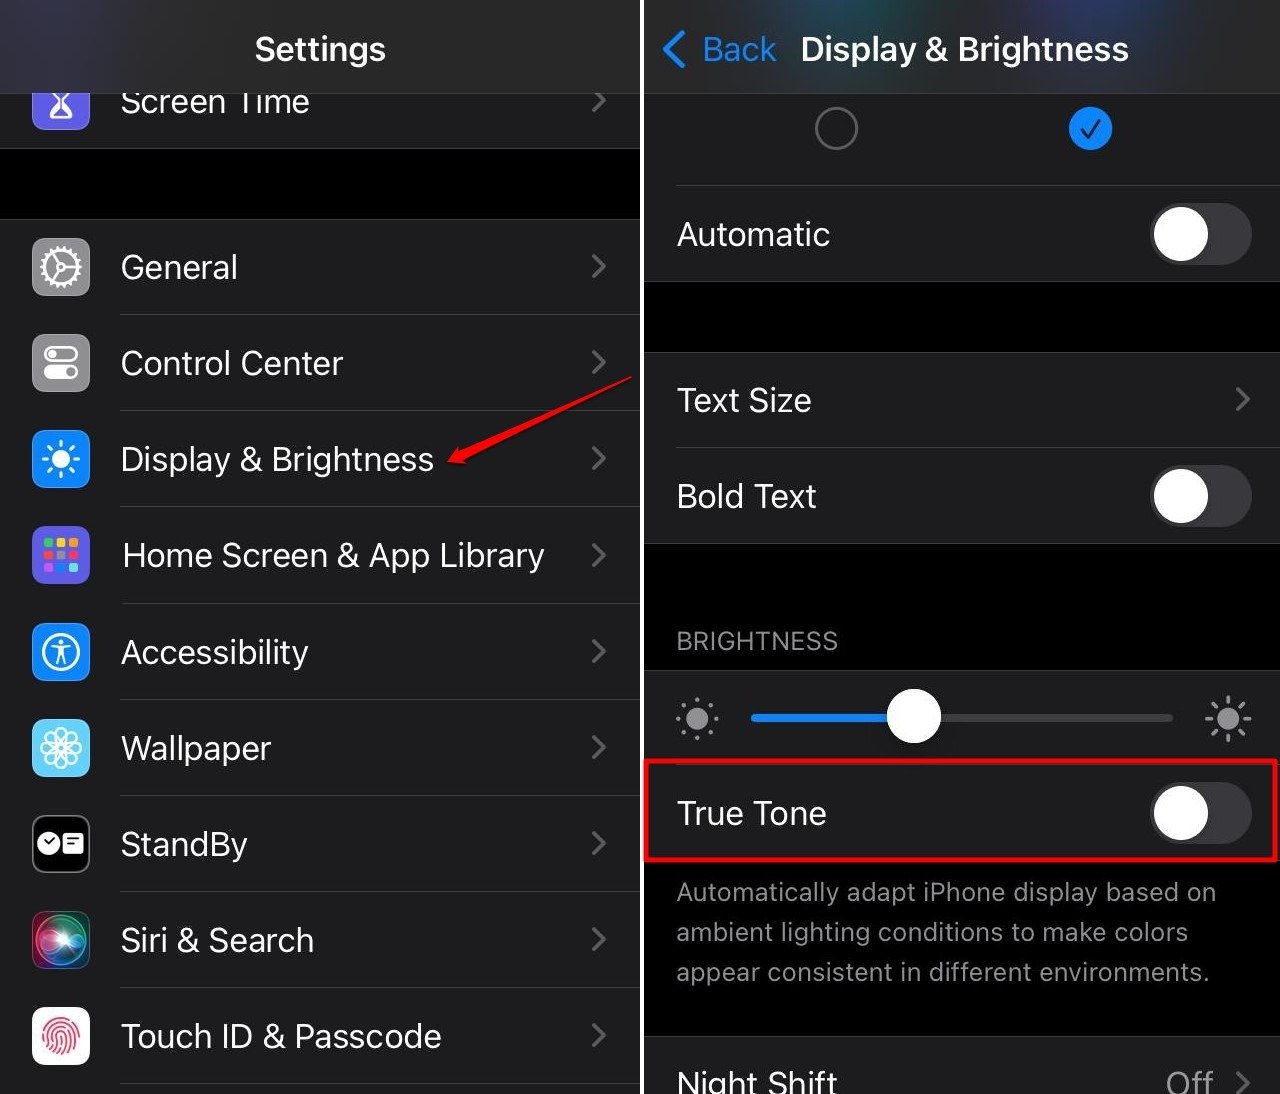 turn off true tone display on iPhone